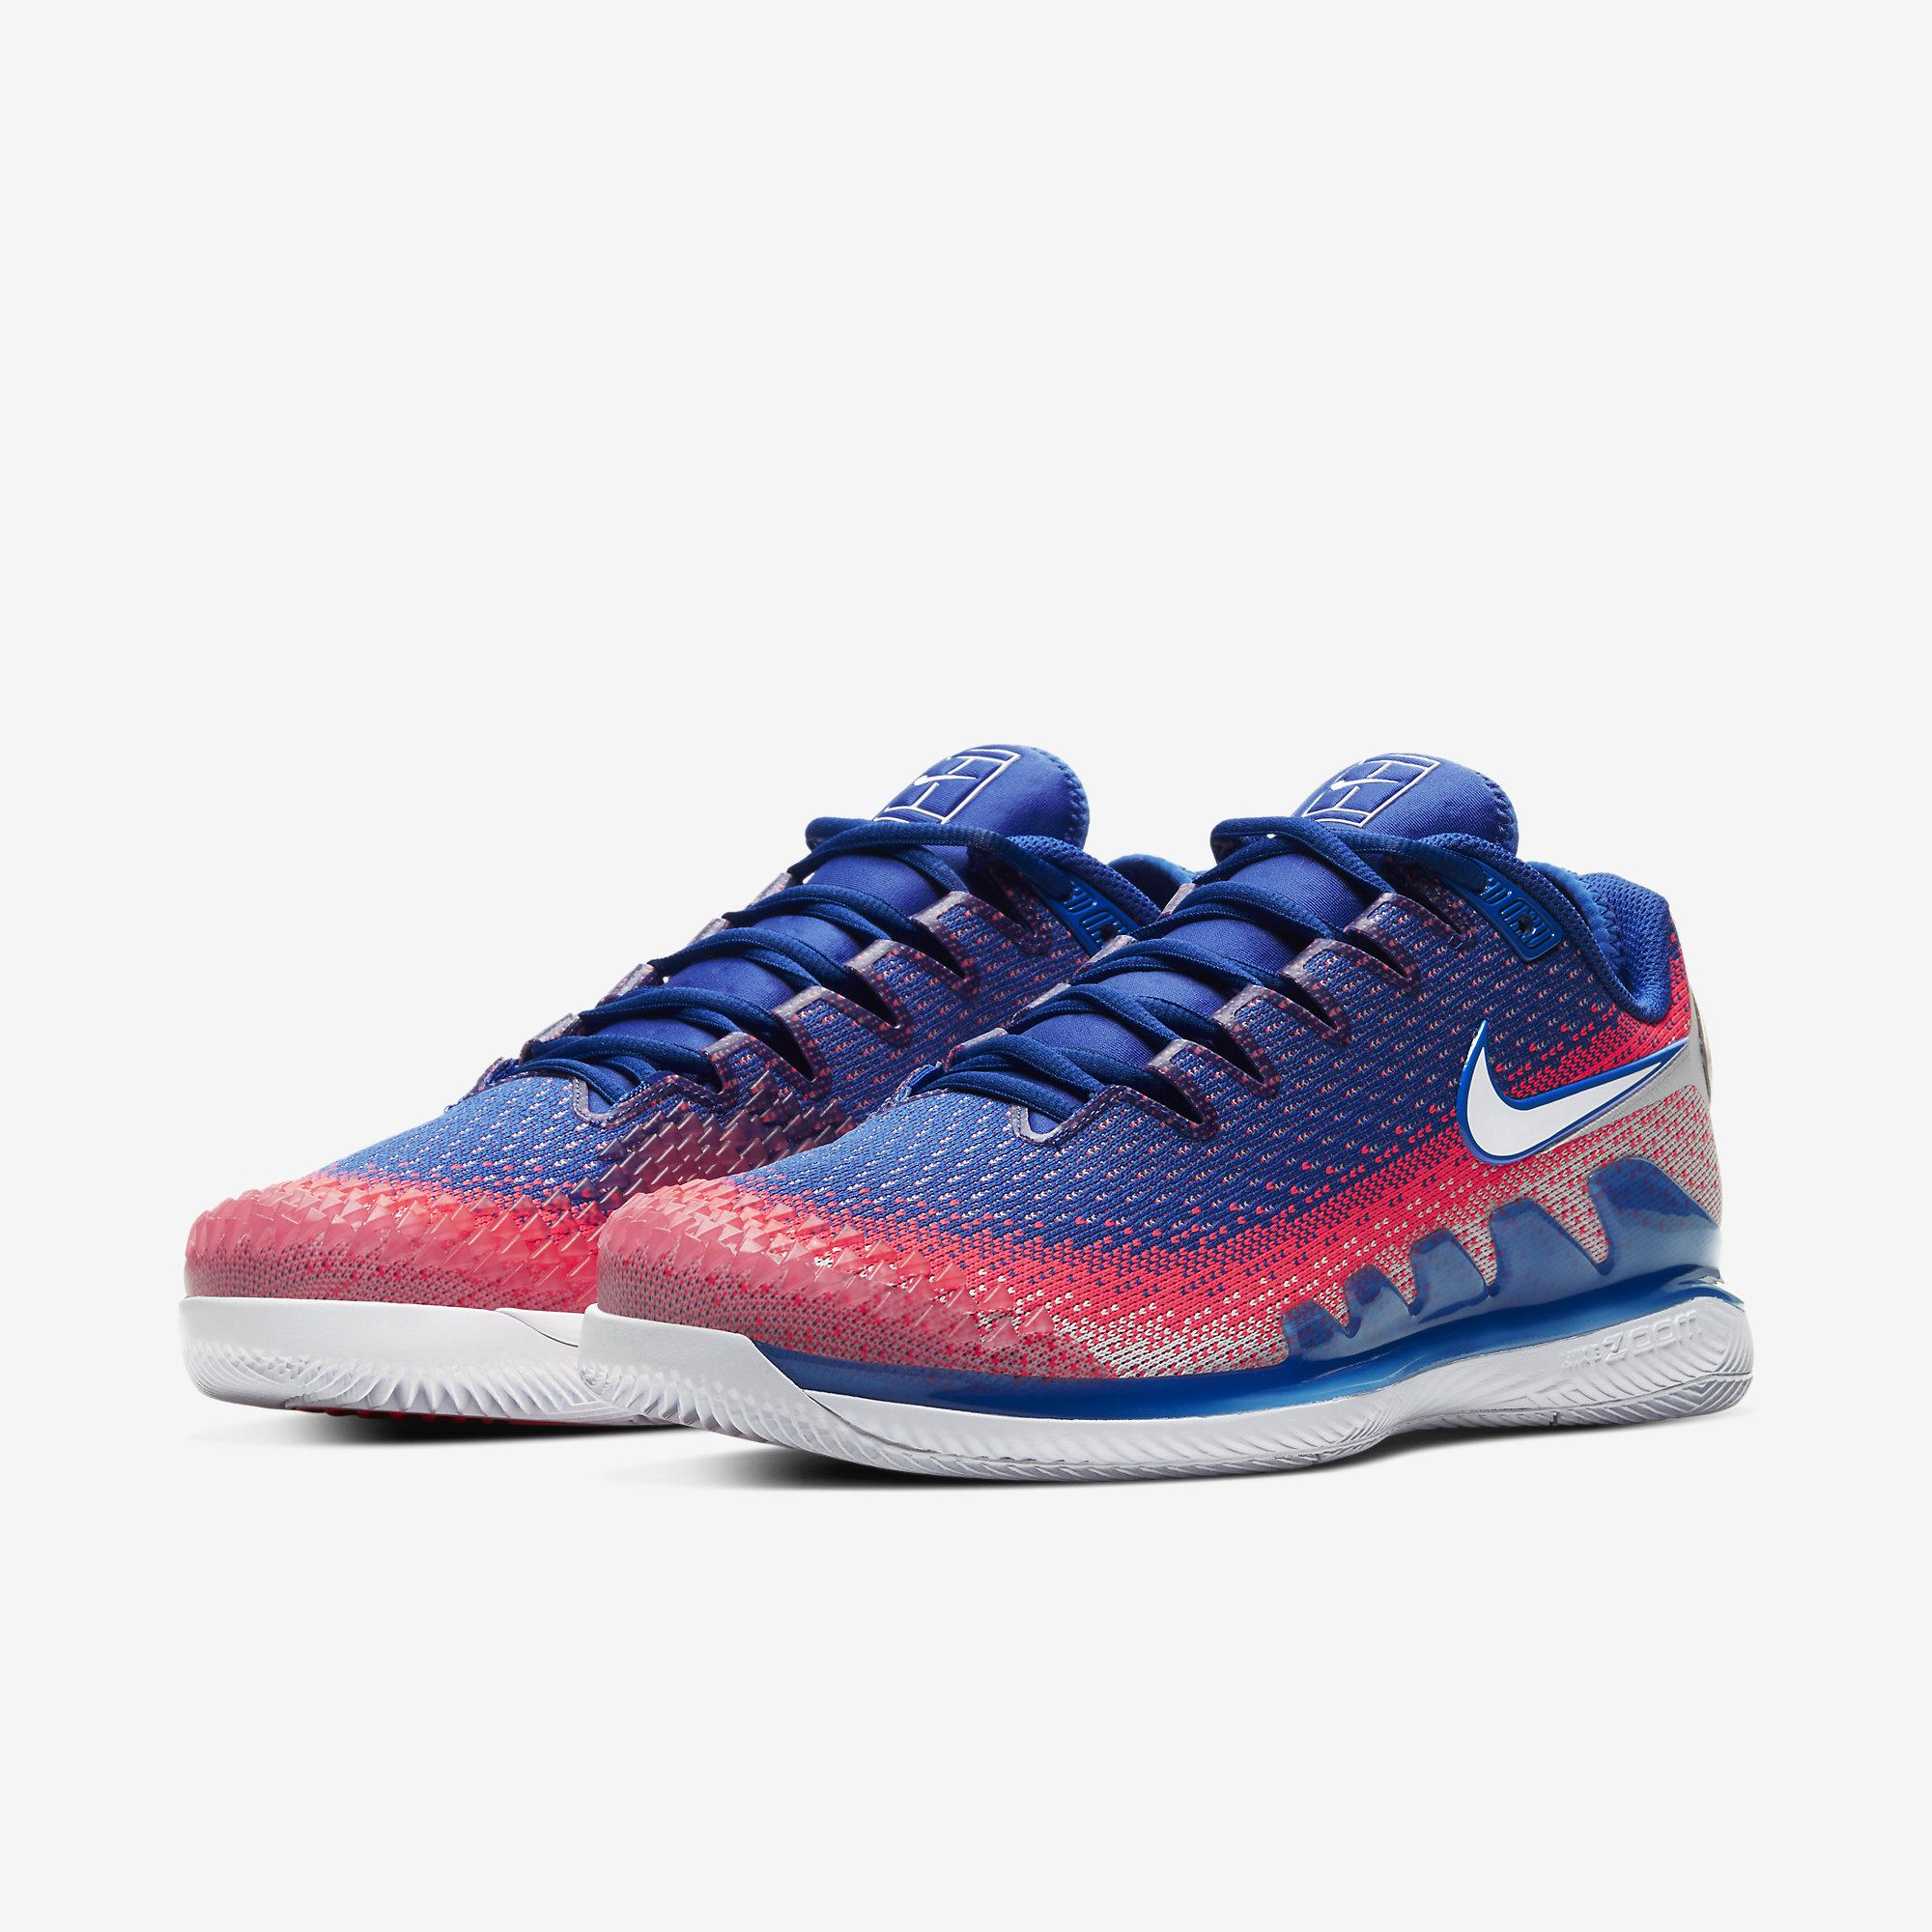 Nike Mens Air Zoom Vapor X Knit Tennis Shoes - Blue/Flash Crimson